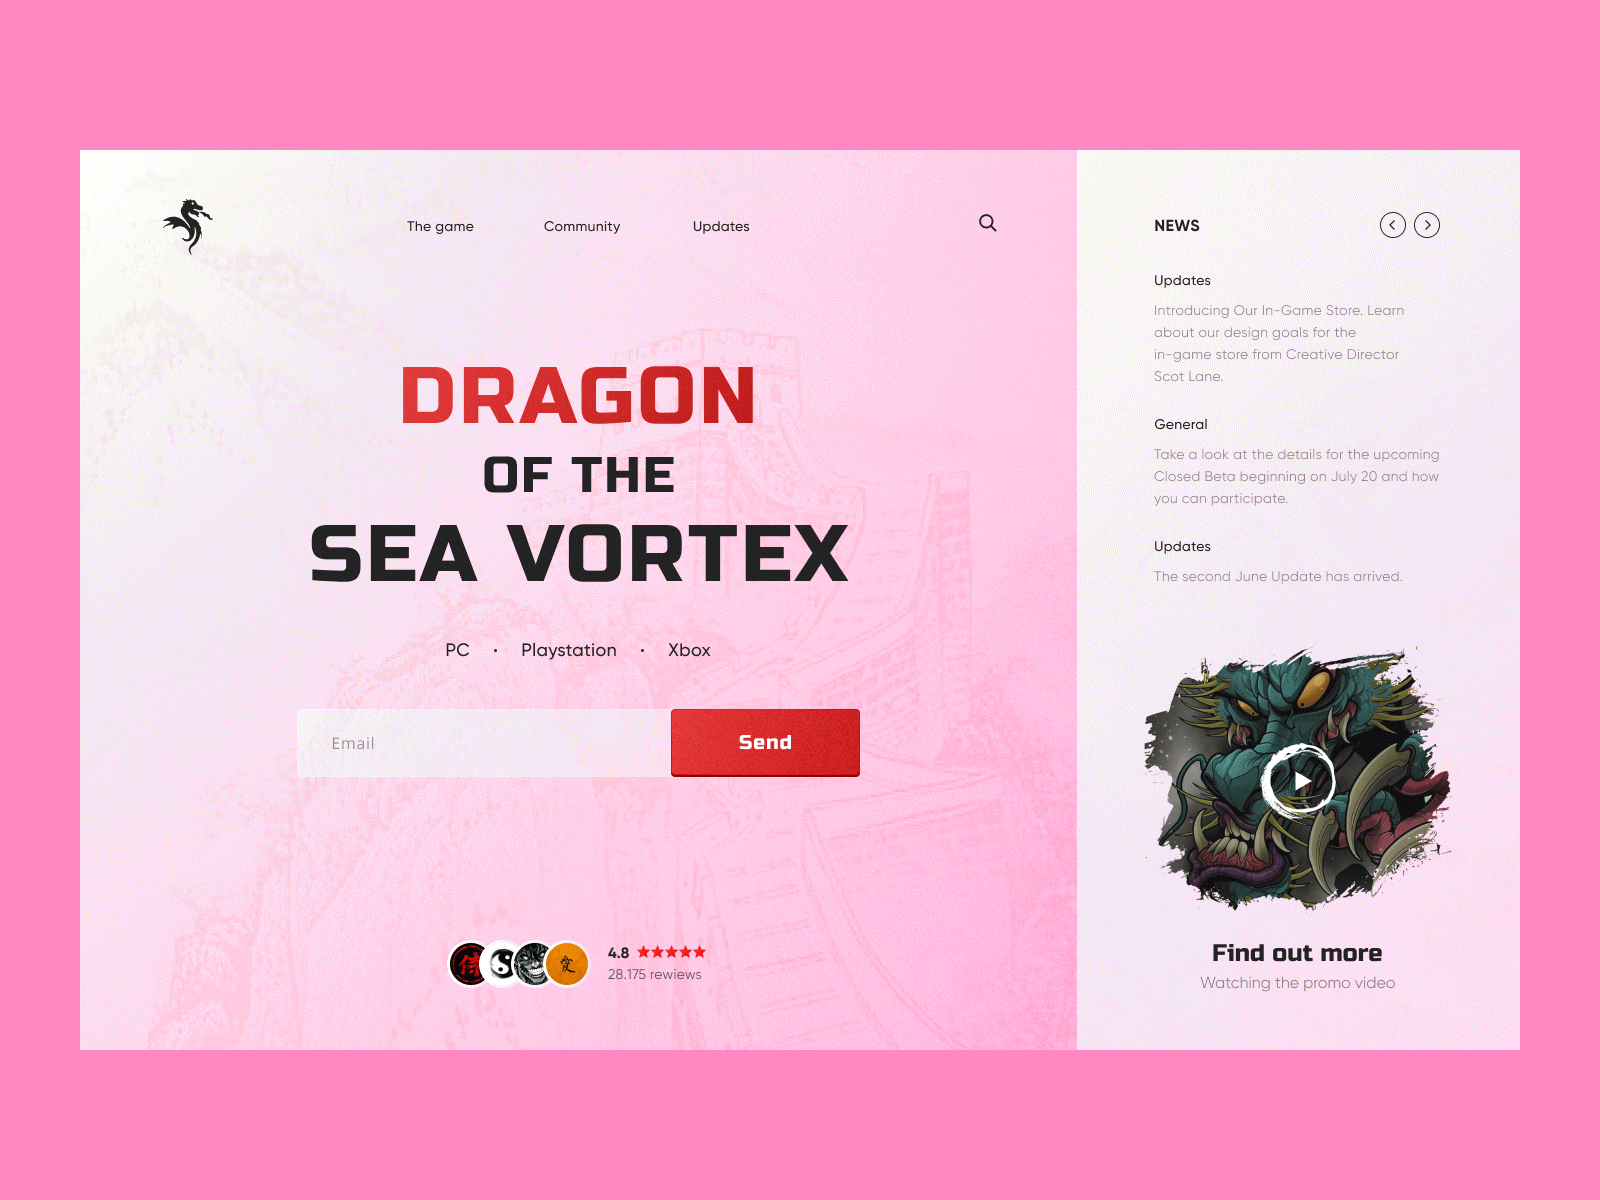 Dragon of the sea vortex